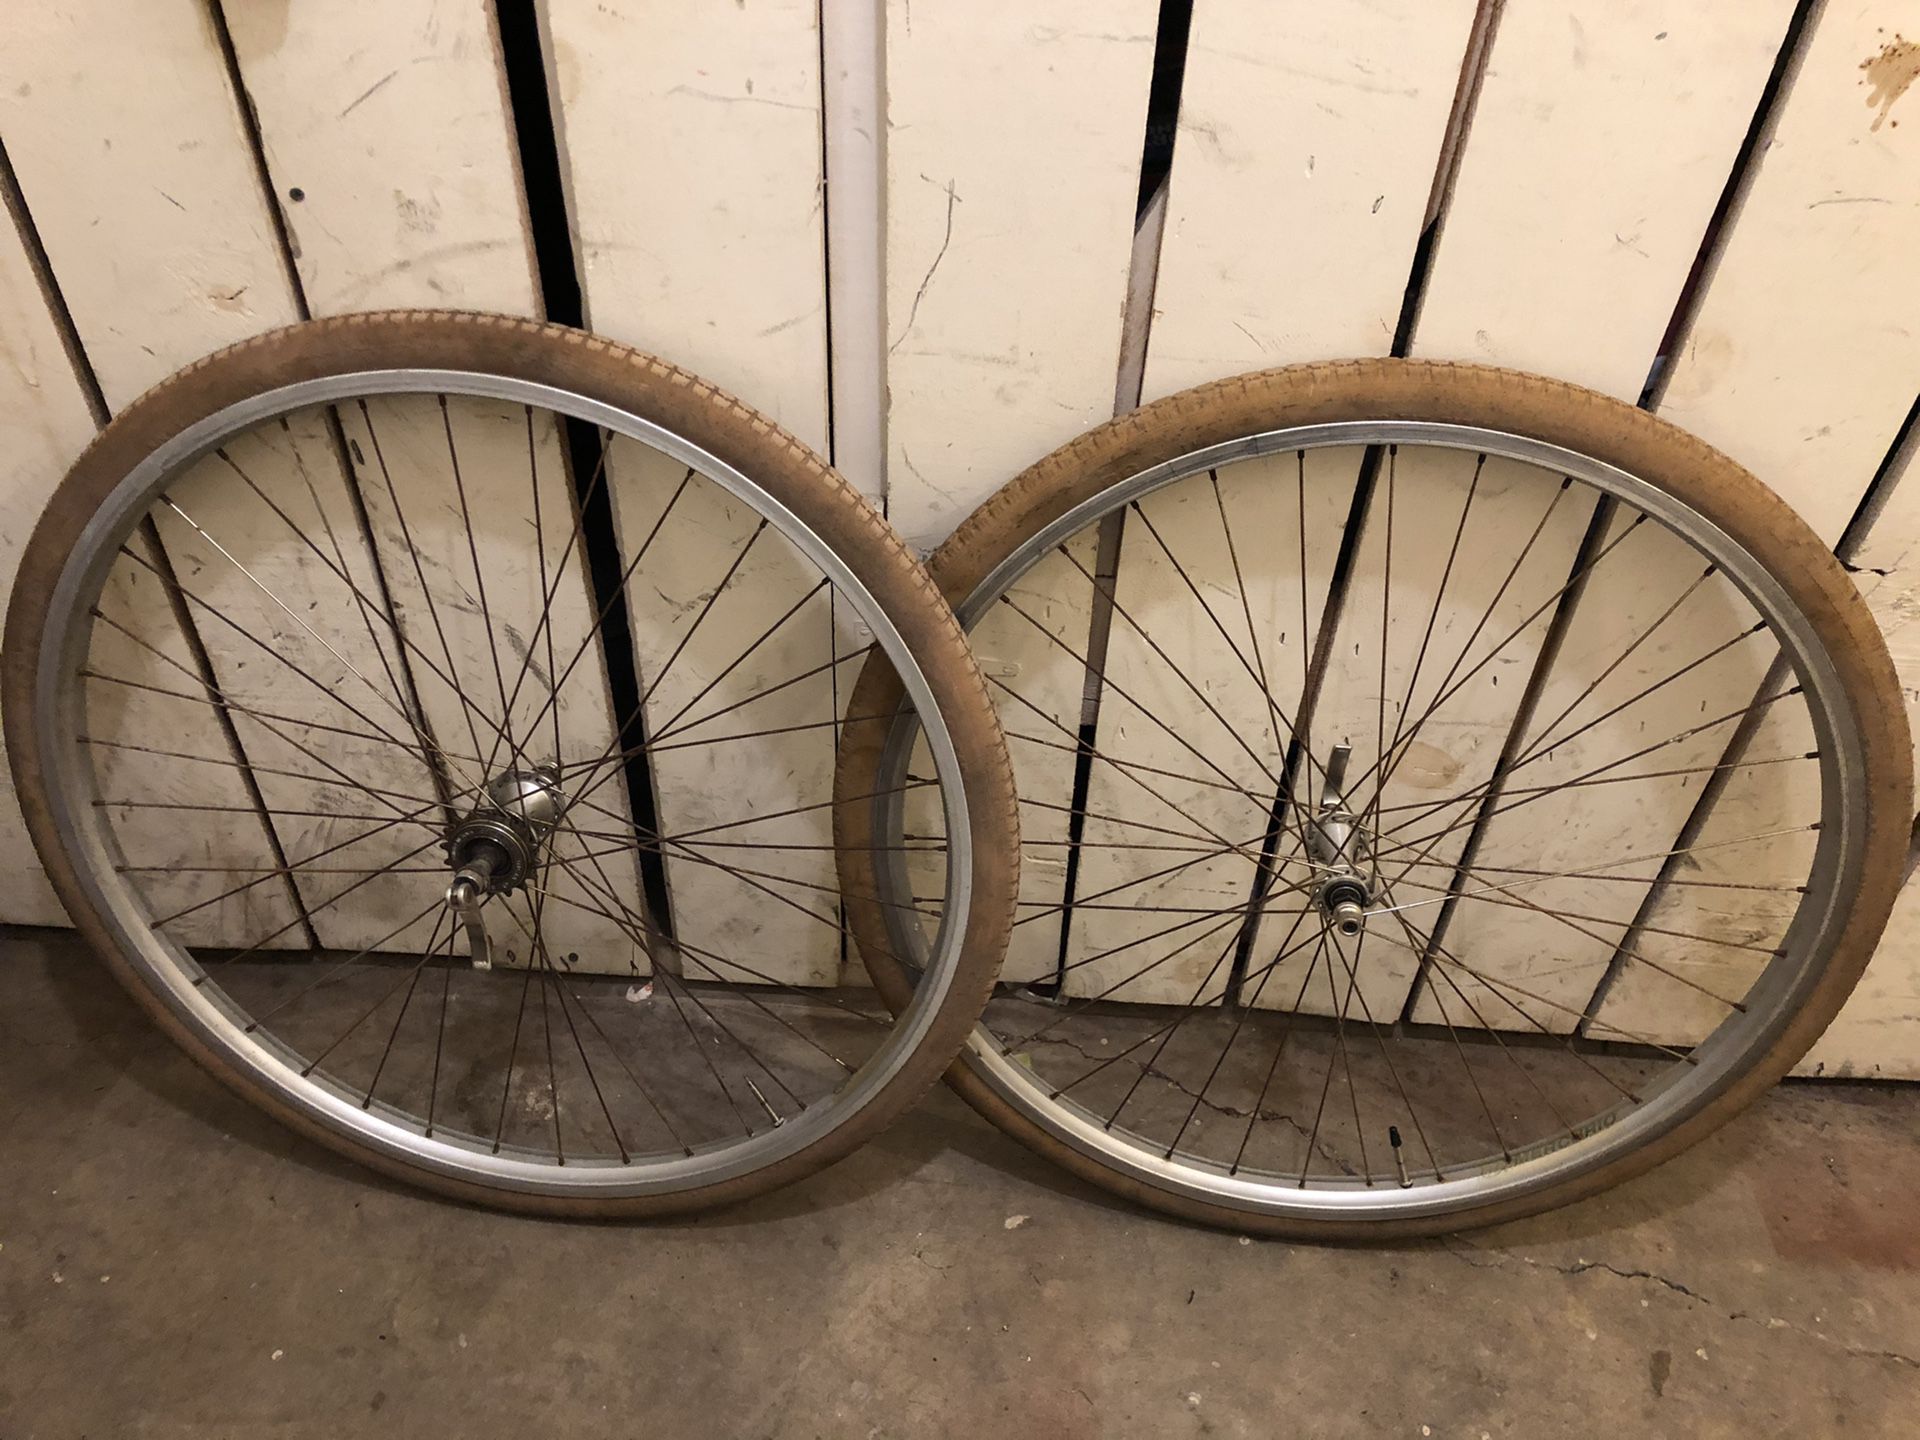 28 inch aluminum wheels $100